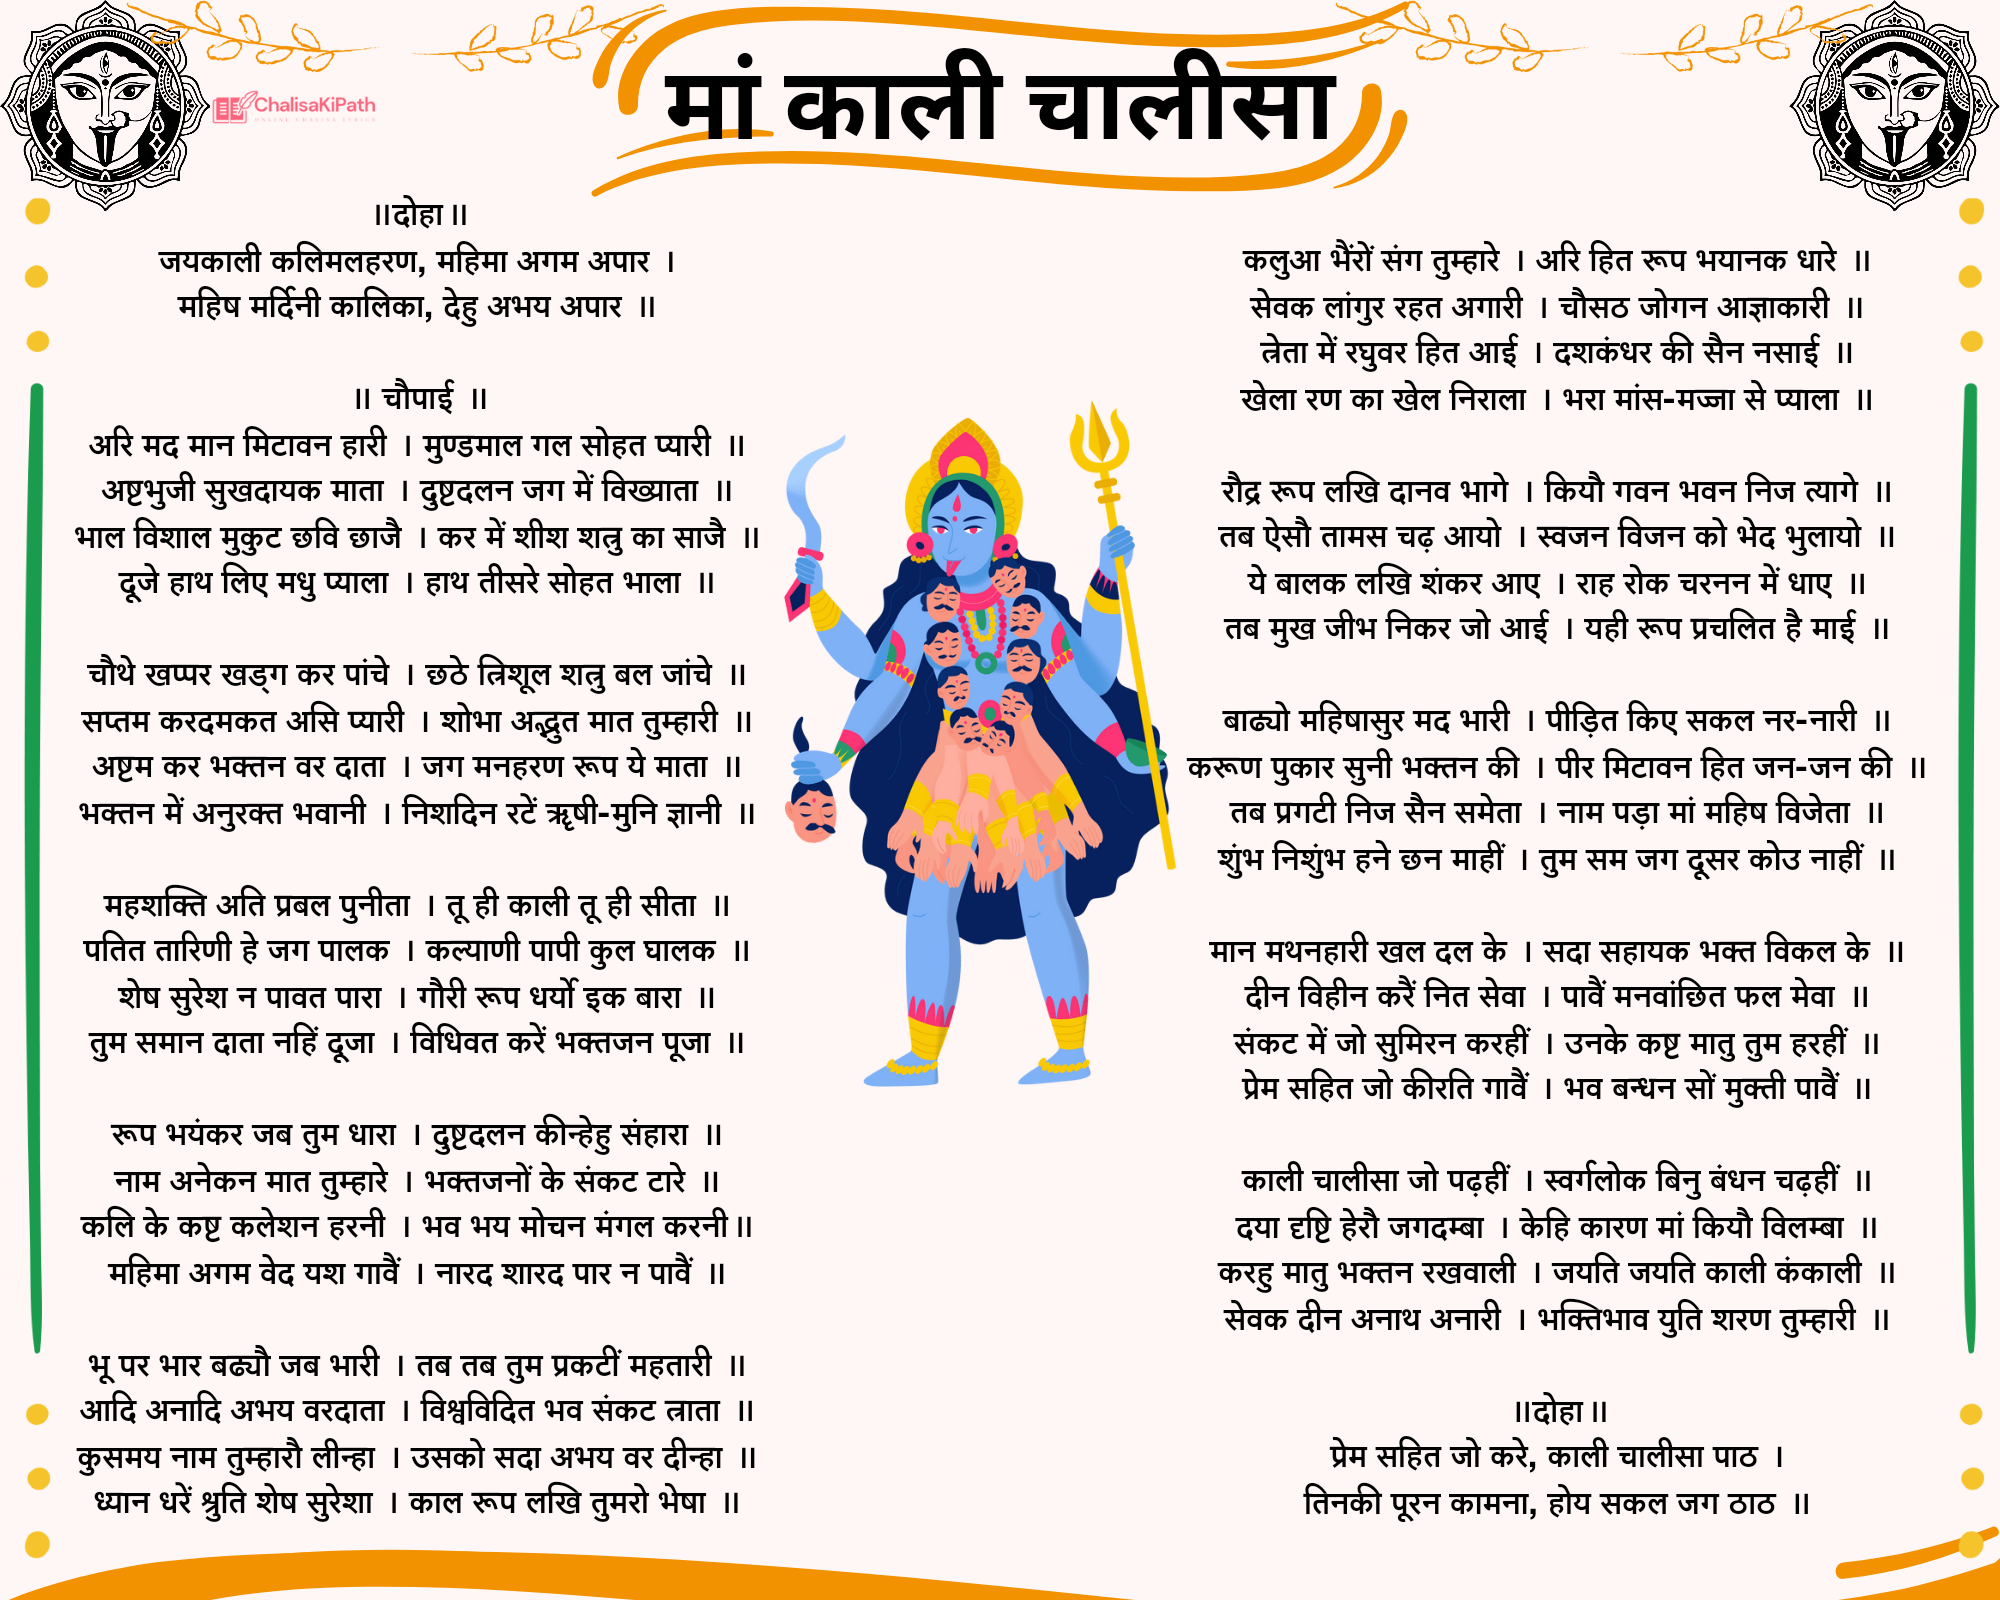 मां काली चालीसा | Maa Kali Chalisa in Hindi Image